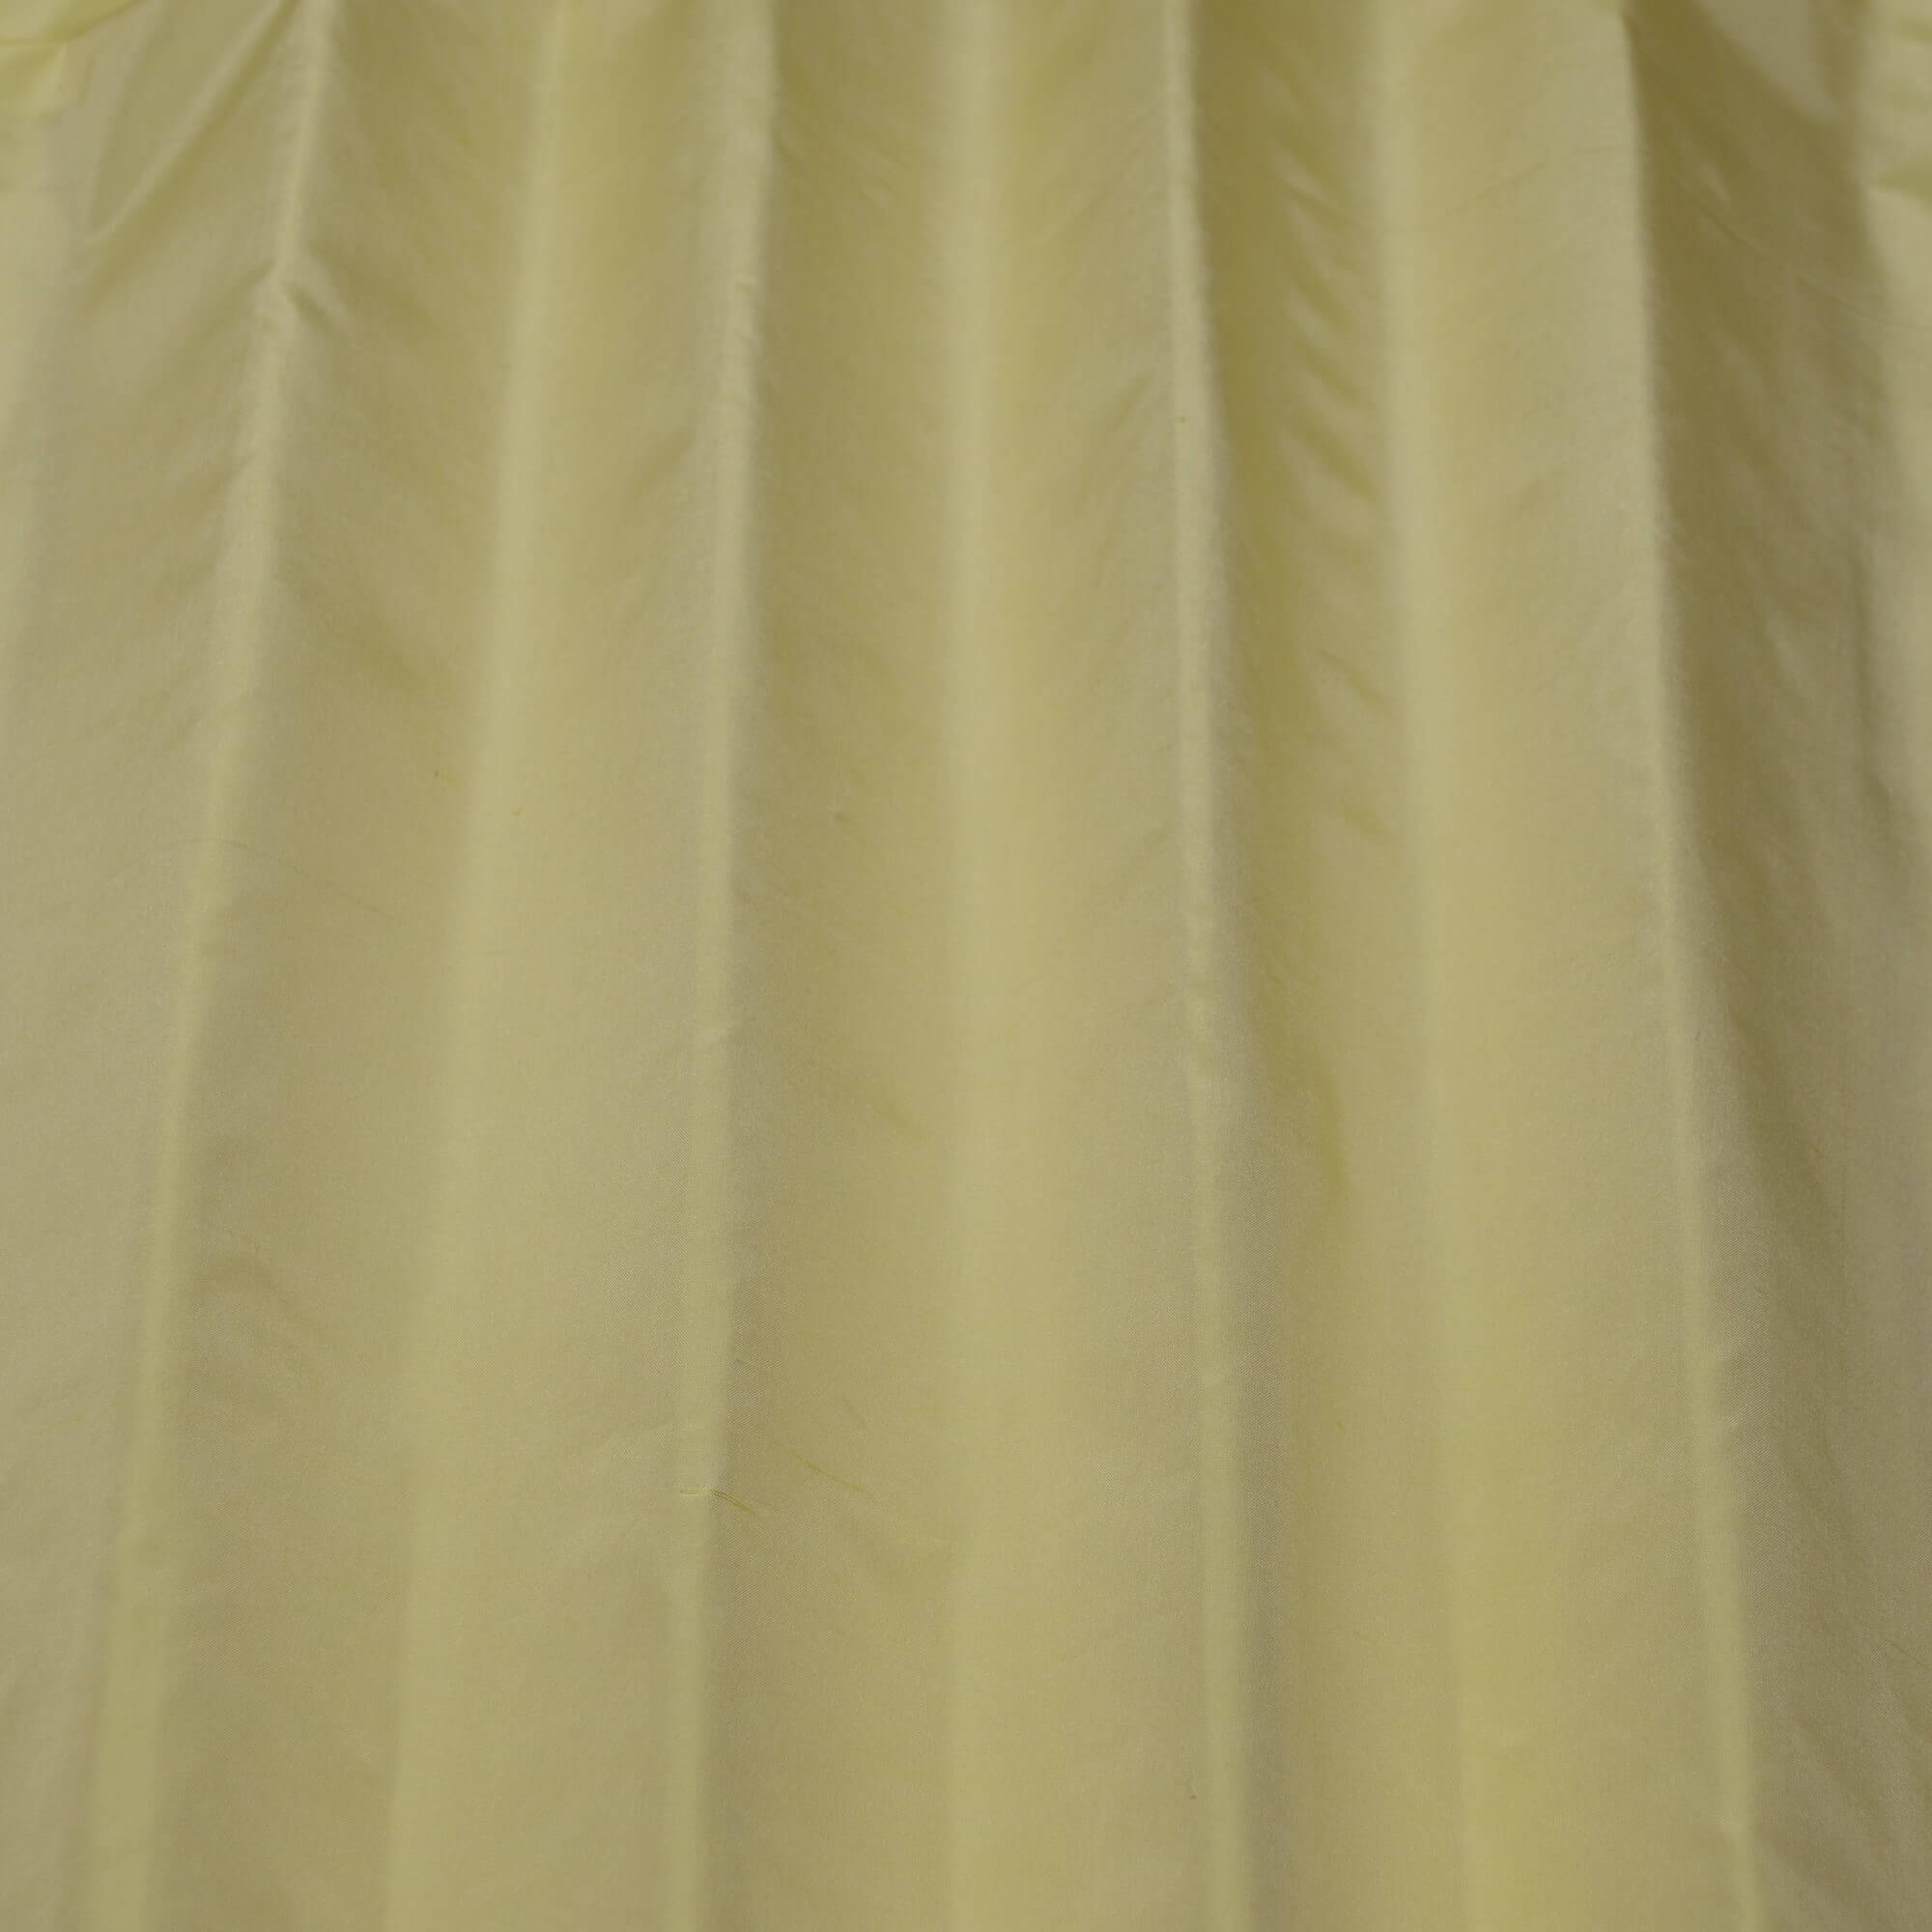 TS-7003: Light Yellow Silk Taffeta Fabric 100% Silk